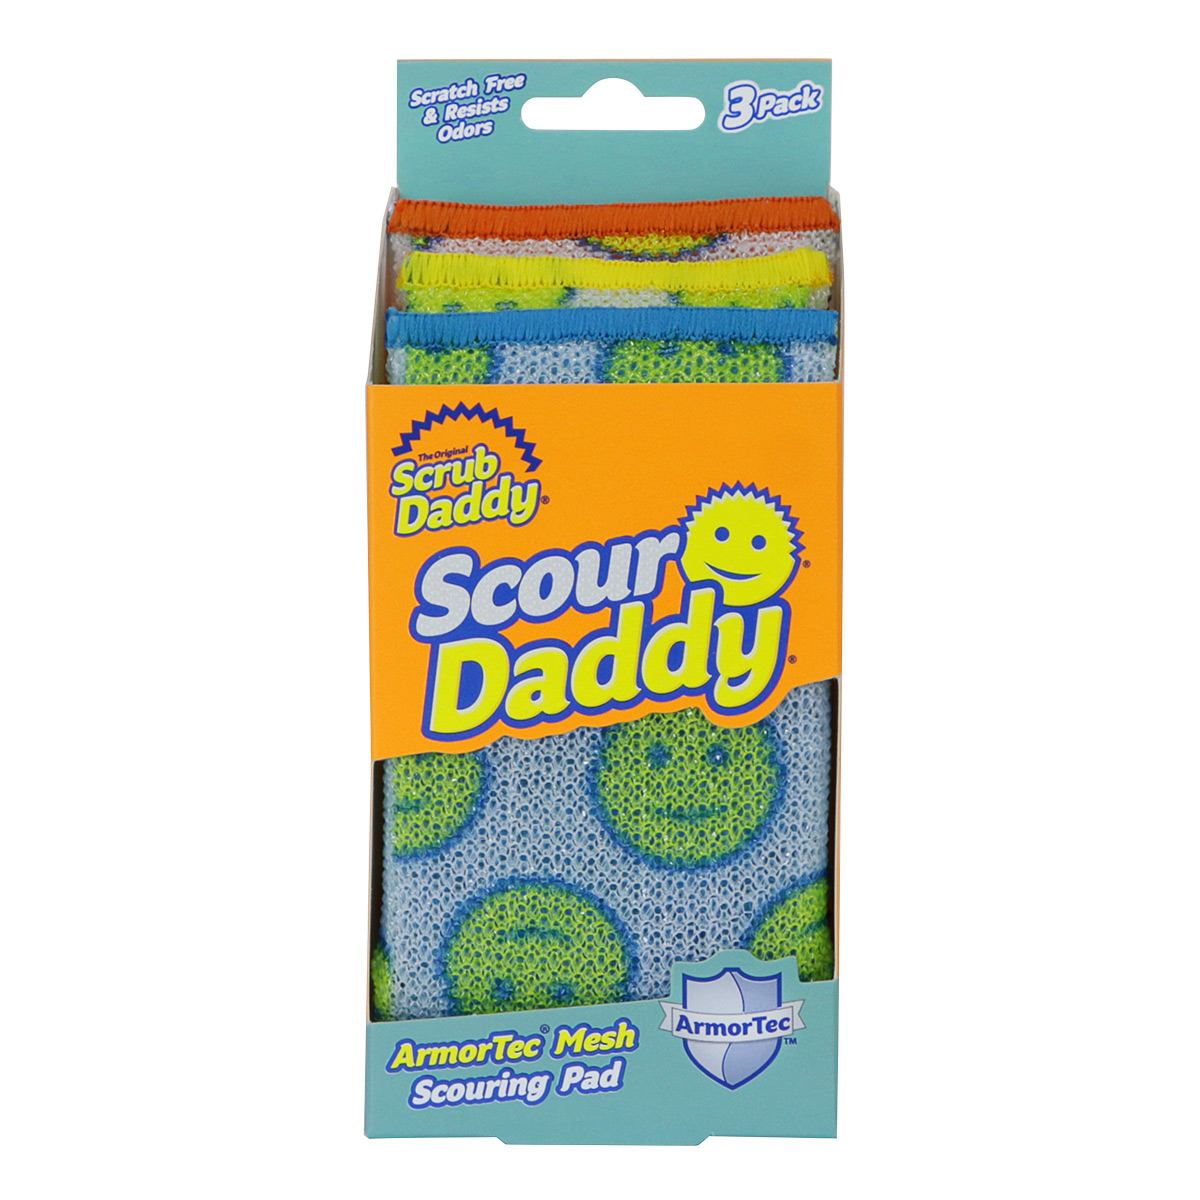 This Scrub Daddy Power Paste really works! @scrubdaddy #scrubdaddy #sc